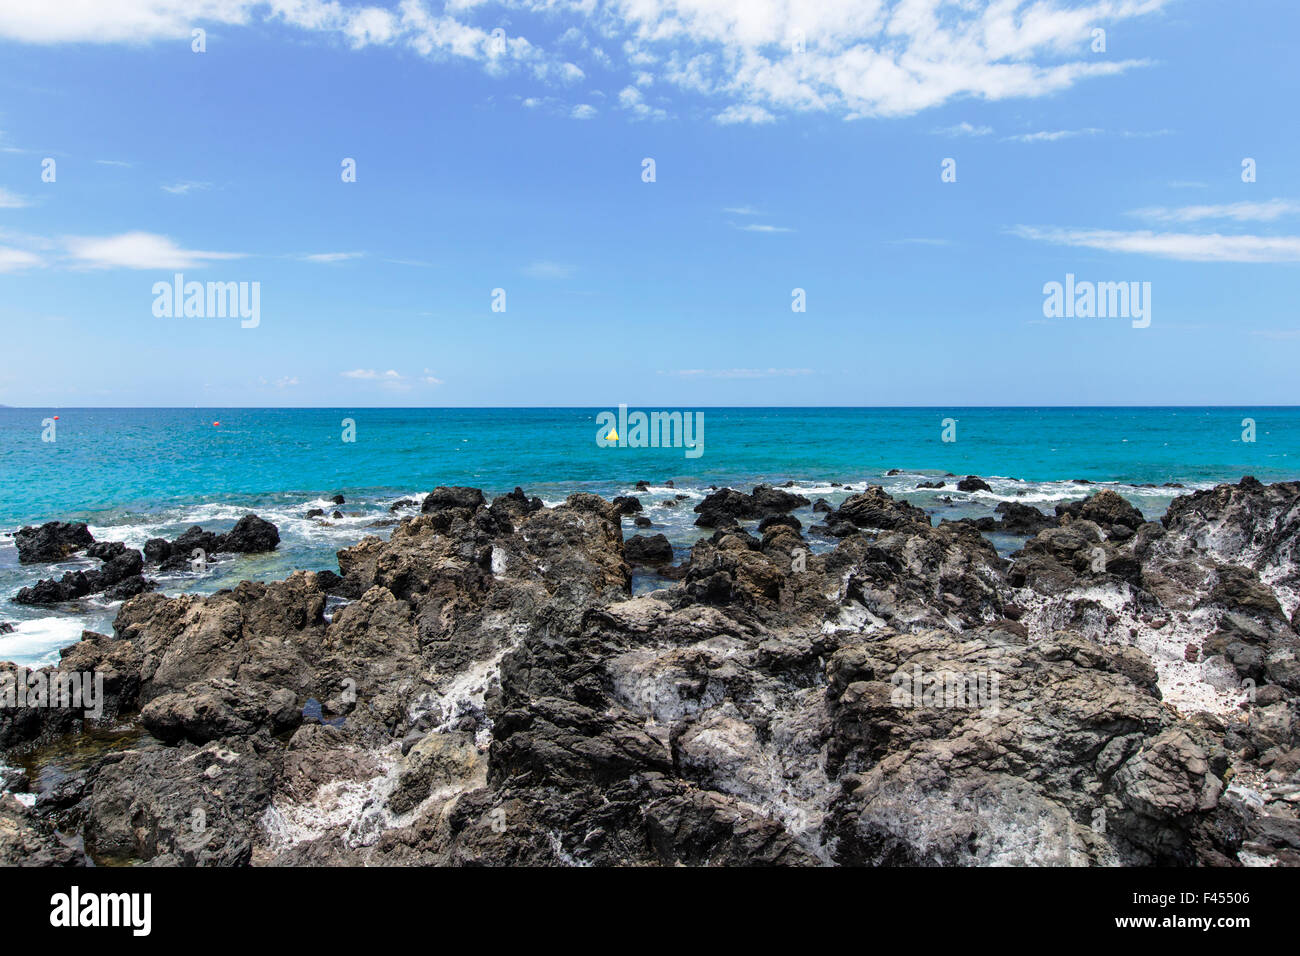 Weltberühmte Hapuna Beach, Kohala Coast, Hawaii, USA Stockfoto